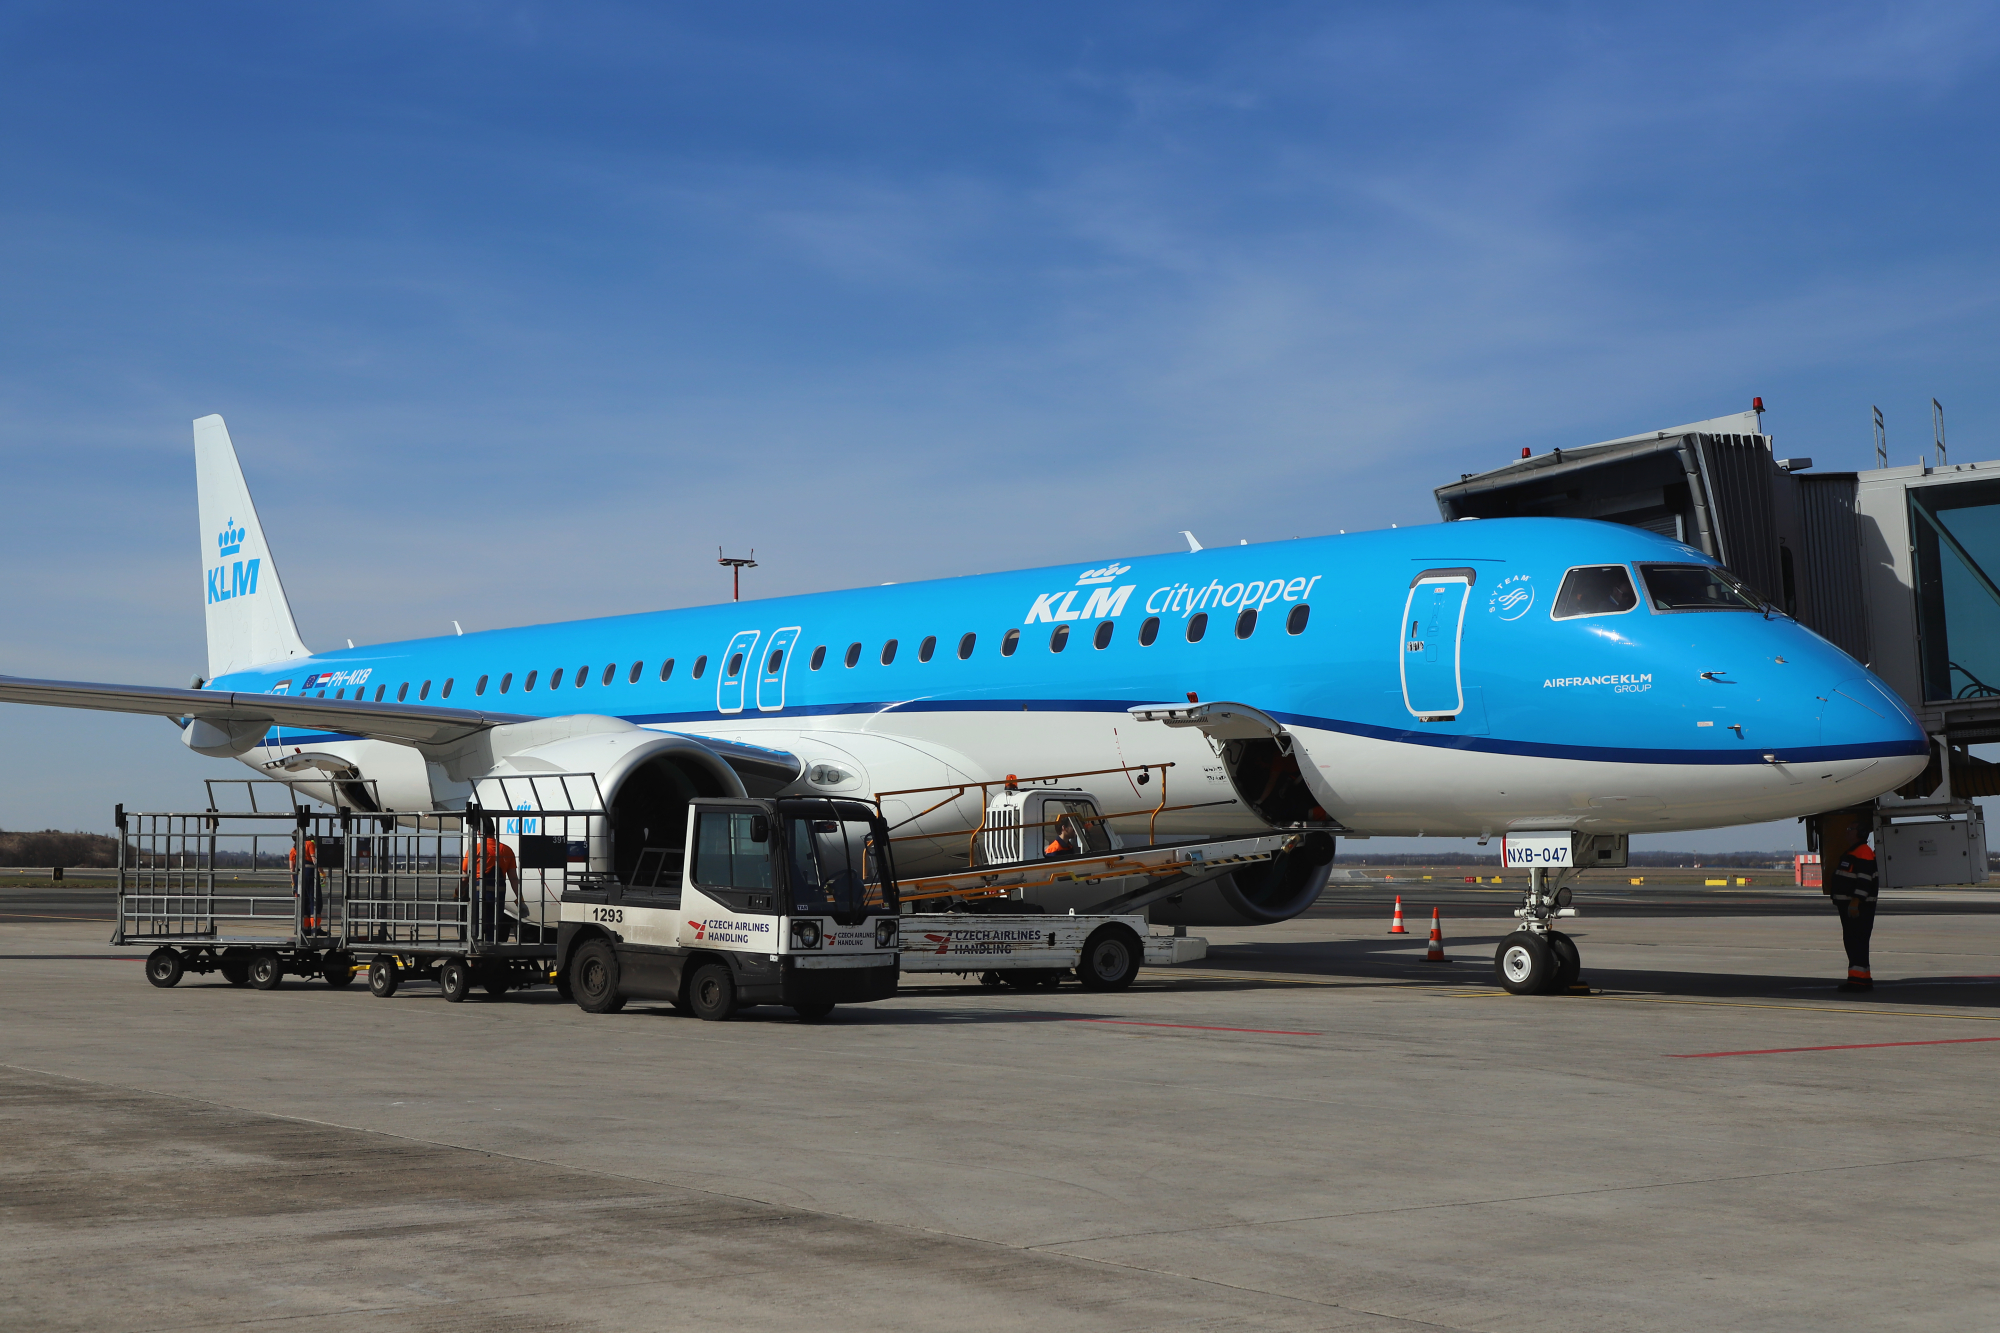 Embraer letecké společnosti KLM v Praze. Zdroj: Letiště Praha